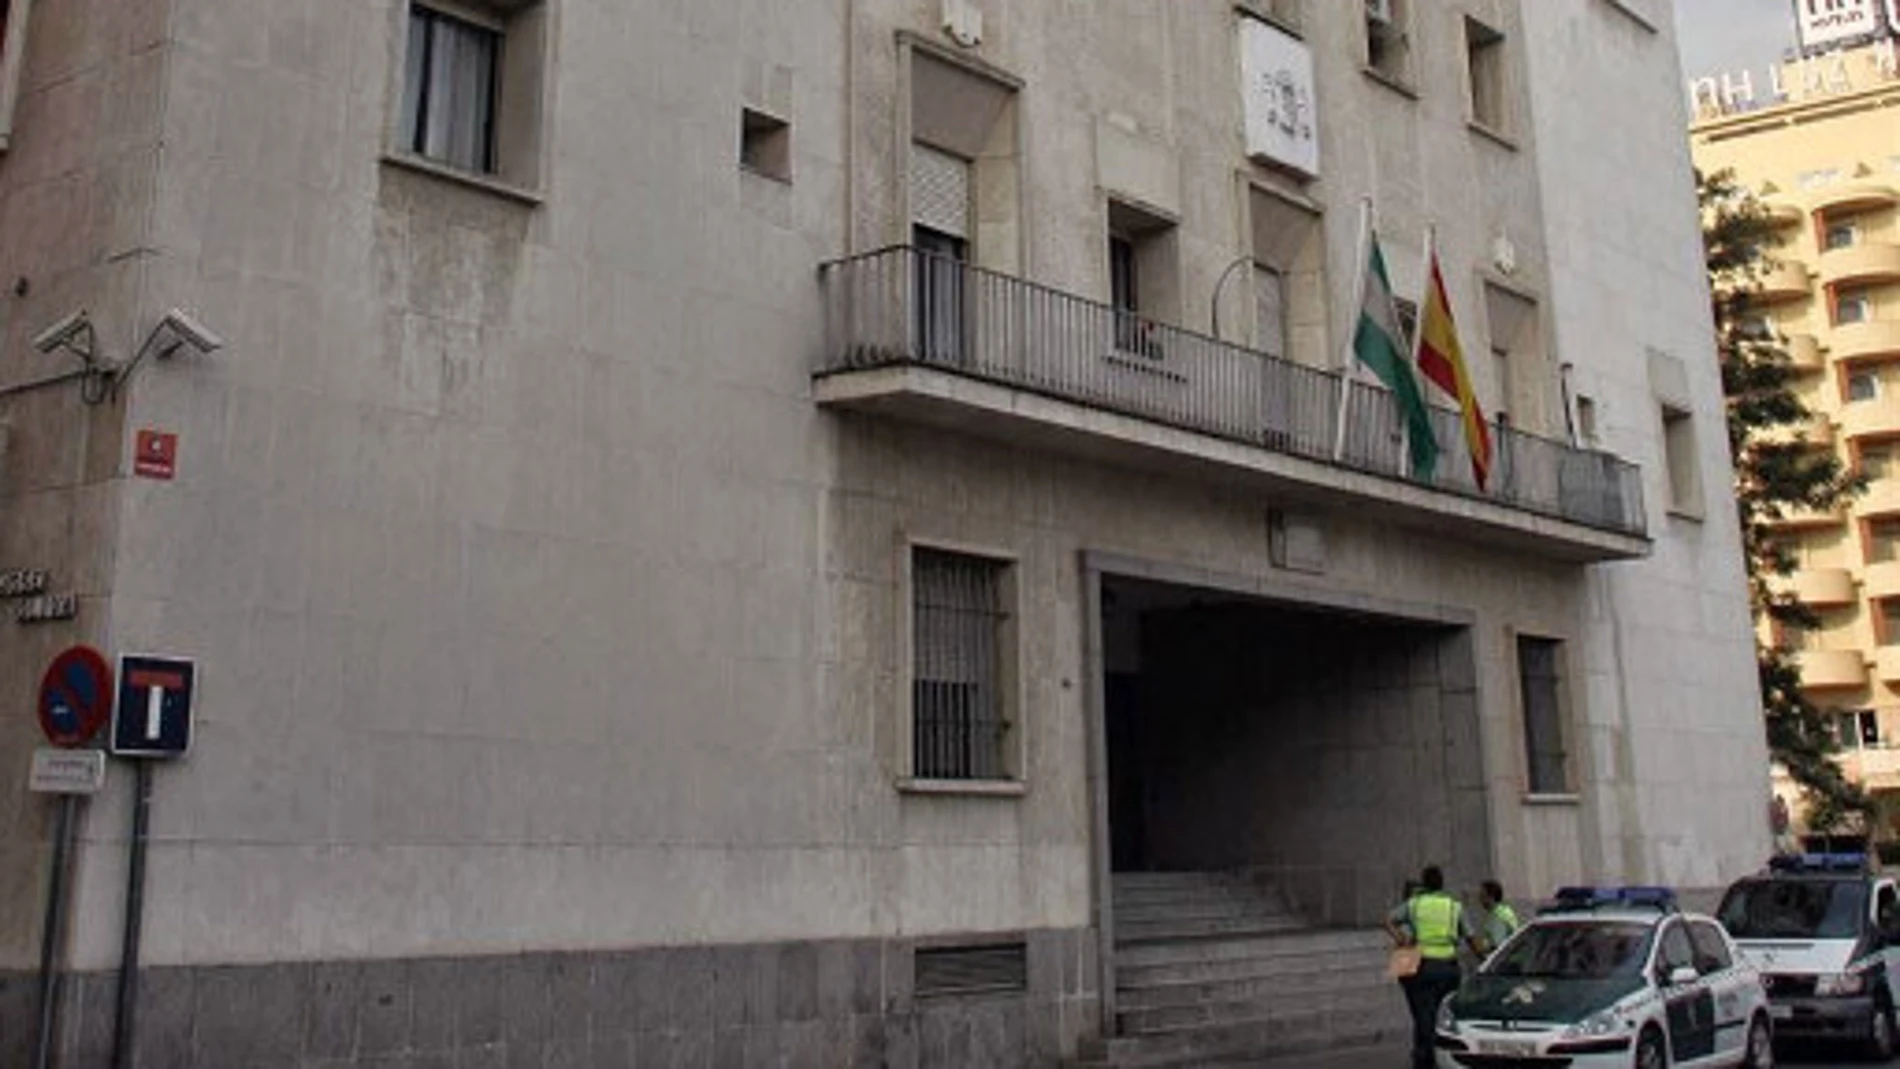 Audiencia provincial de Huelva/Google View